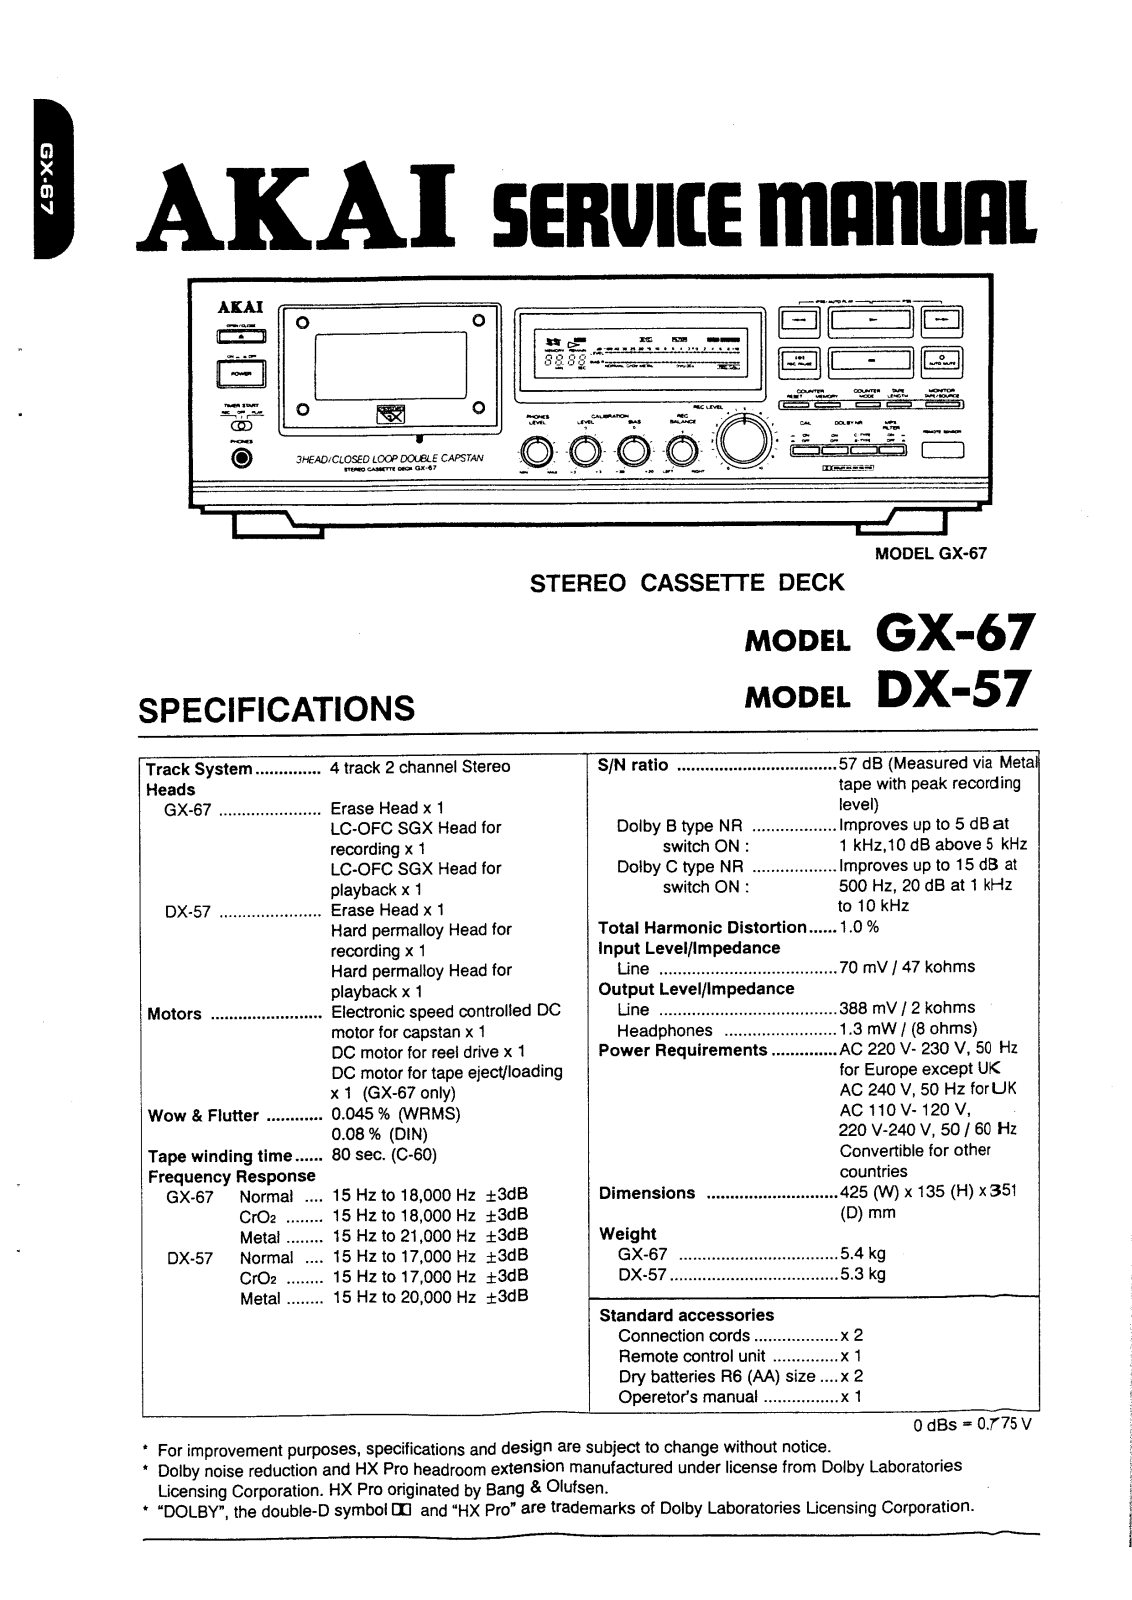 Akai DX-57, GX-67 Service manual